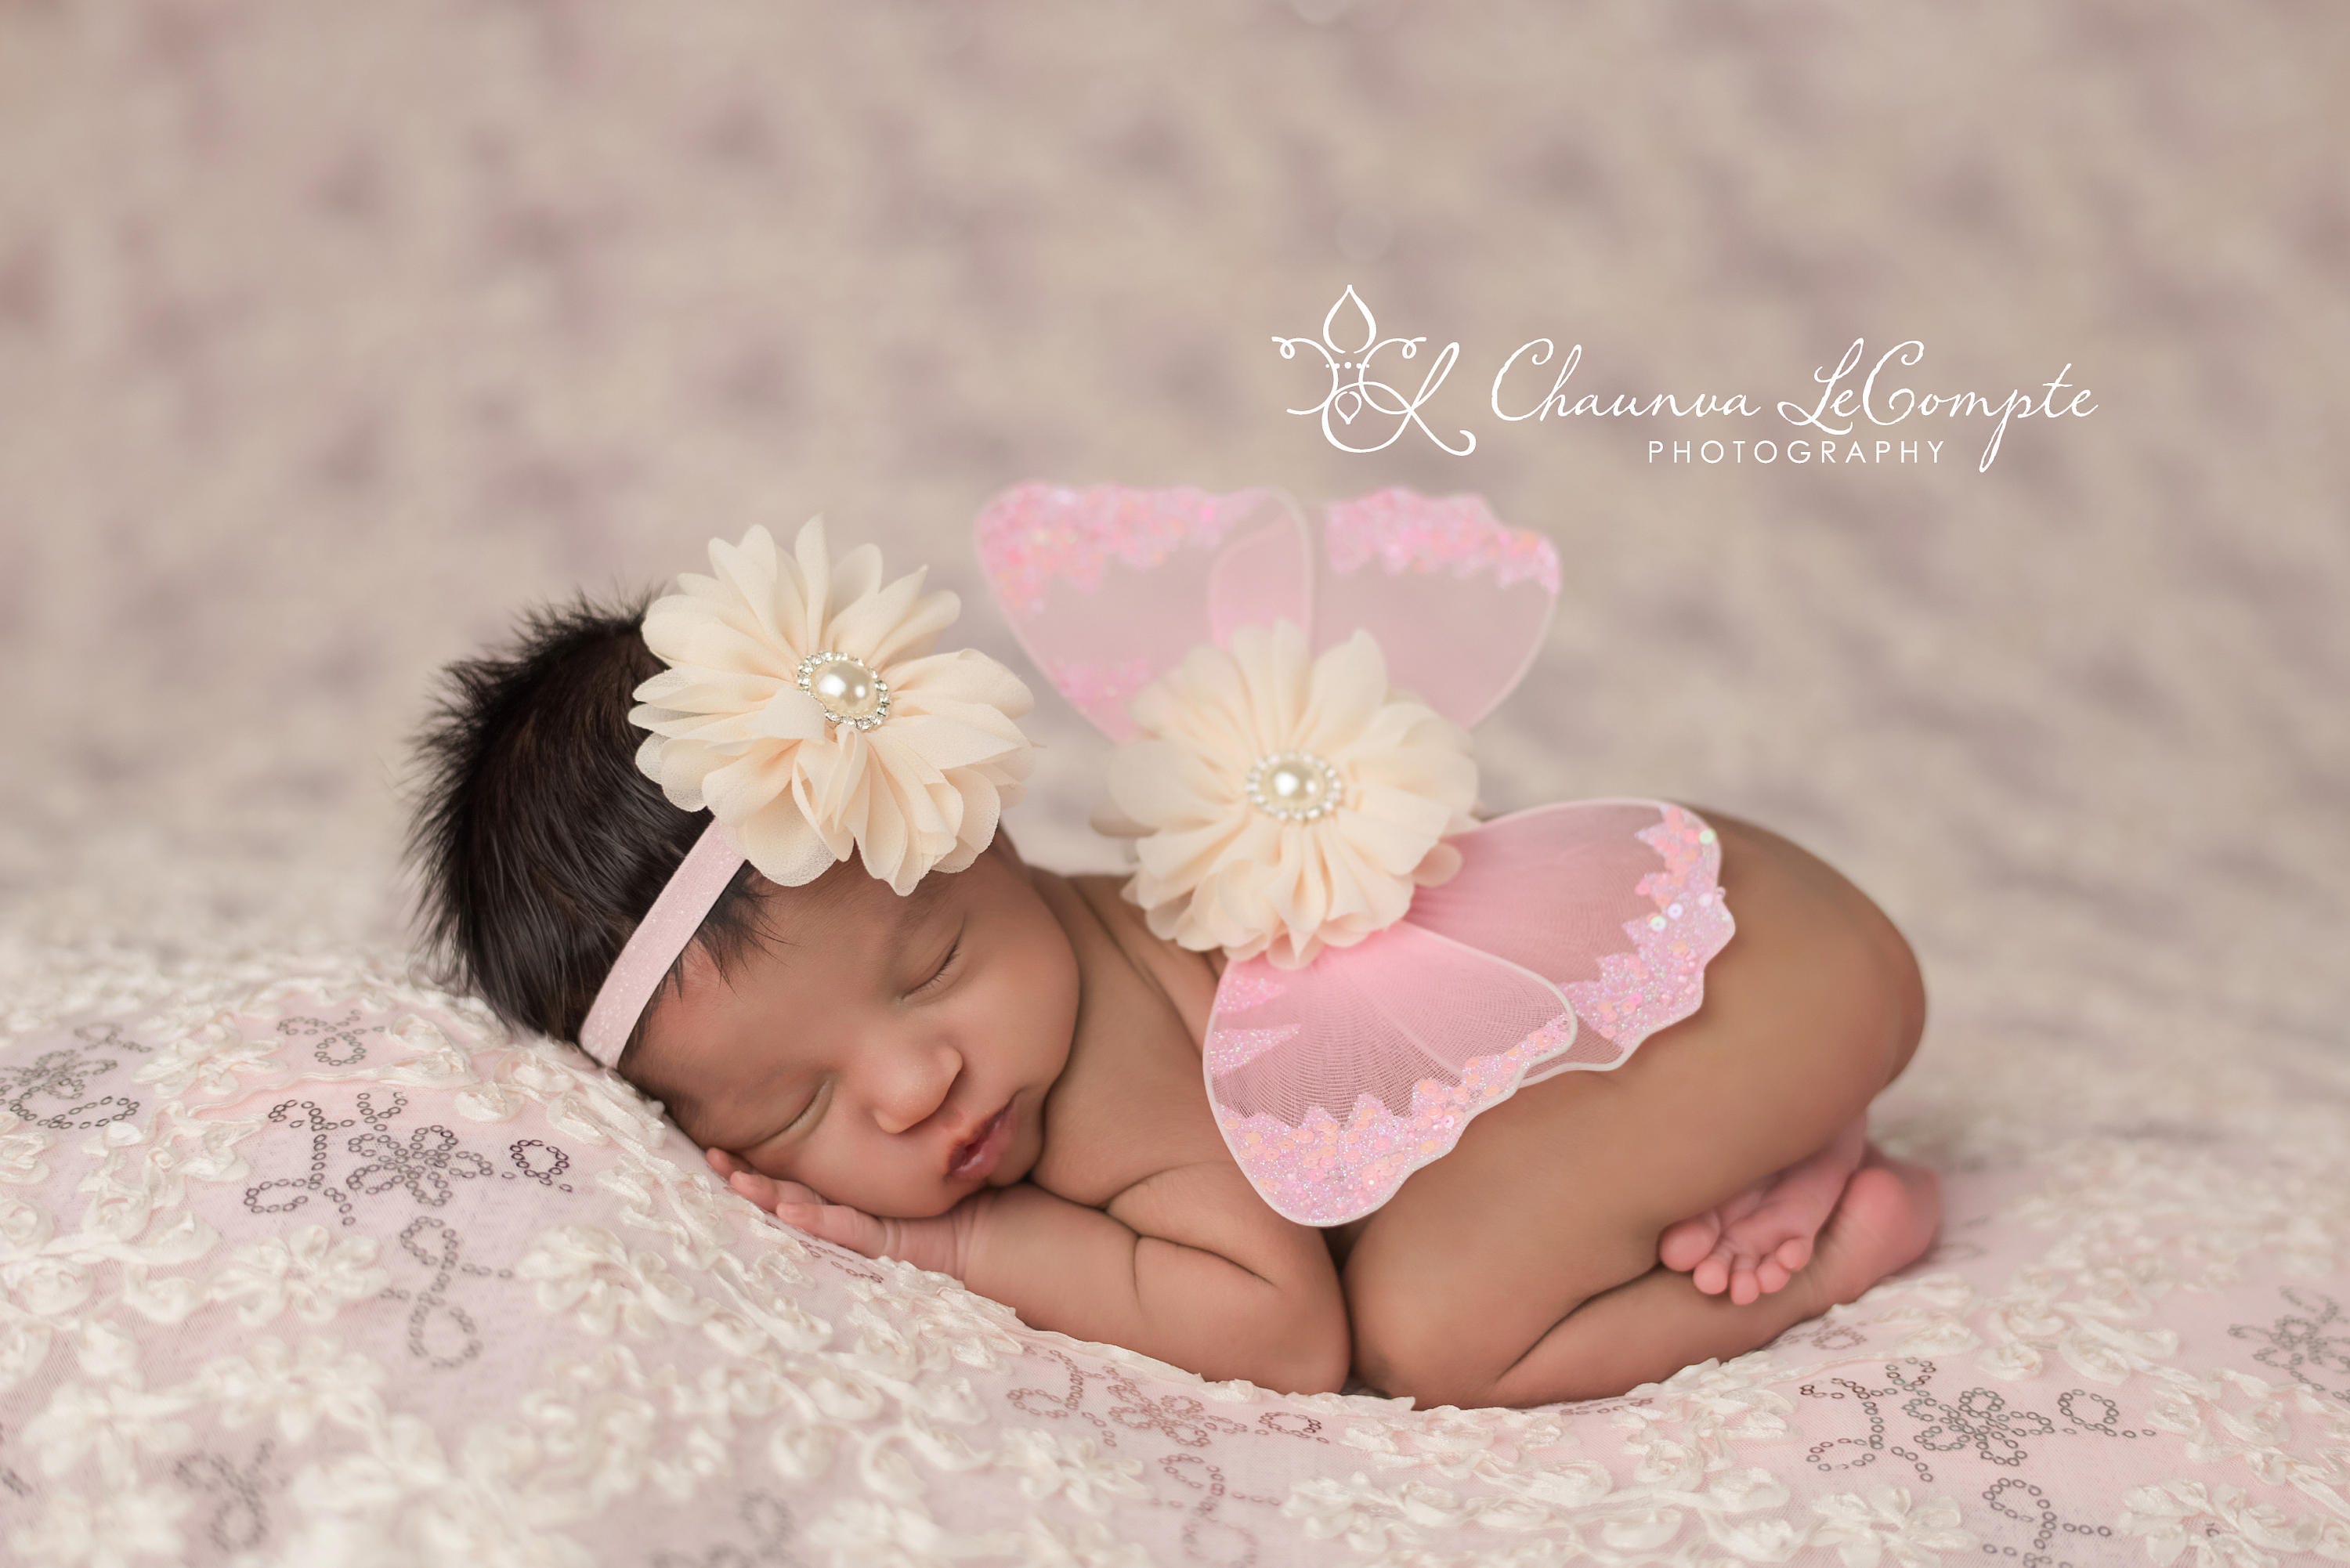 Pink and Ivory Butterfly Wing Set / Newborn Wings / Newborn Wing Prop / Baby Girl Headband / Newborn Photo Prop / Newborn Butterfly Wings